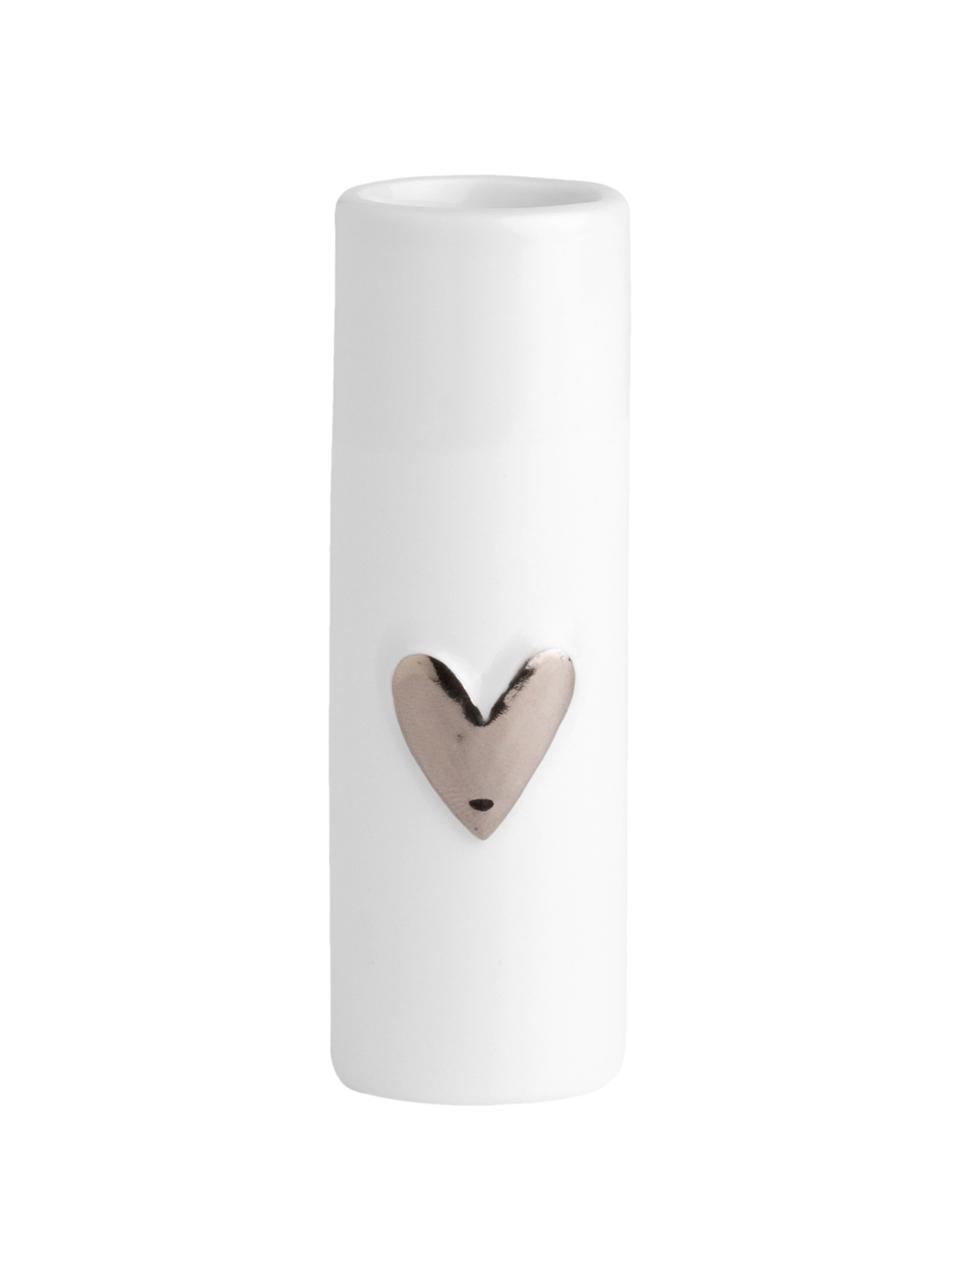 XS porseleinen vazen Heart, 2 stuks, Porselein, Wit, zilverkleurig, Ø 4 x H 9 cm